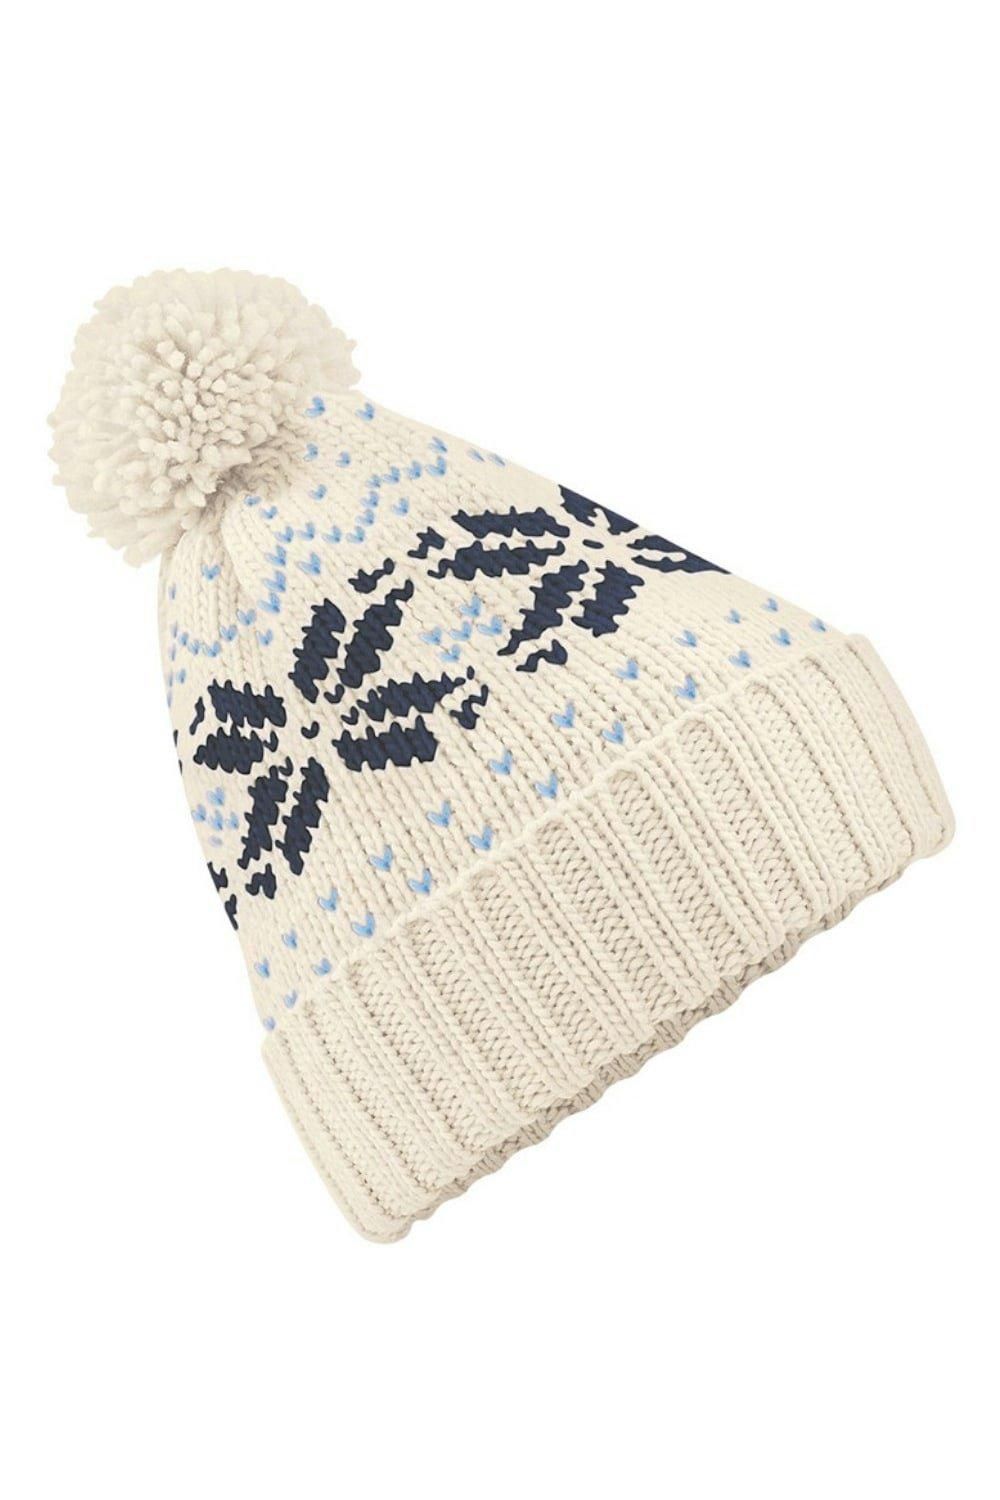 Hats | Fair Isle Snowstar Winter Beanie Hat | Beechfield | Debenhams UK